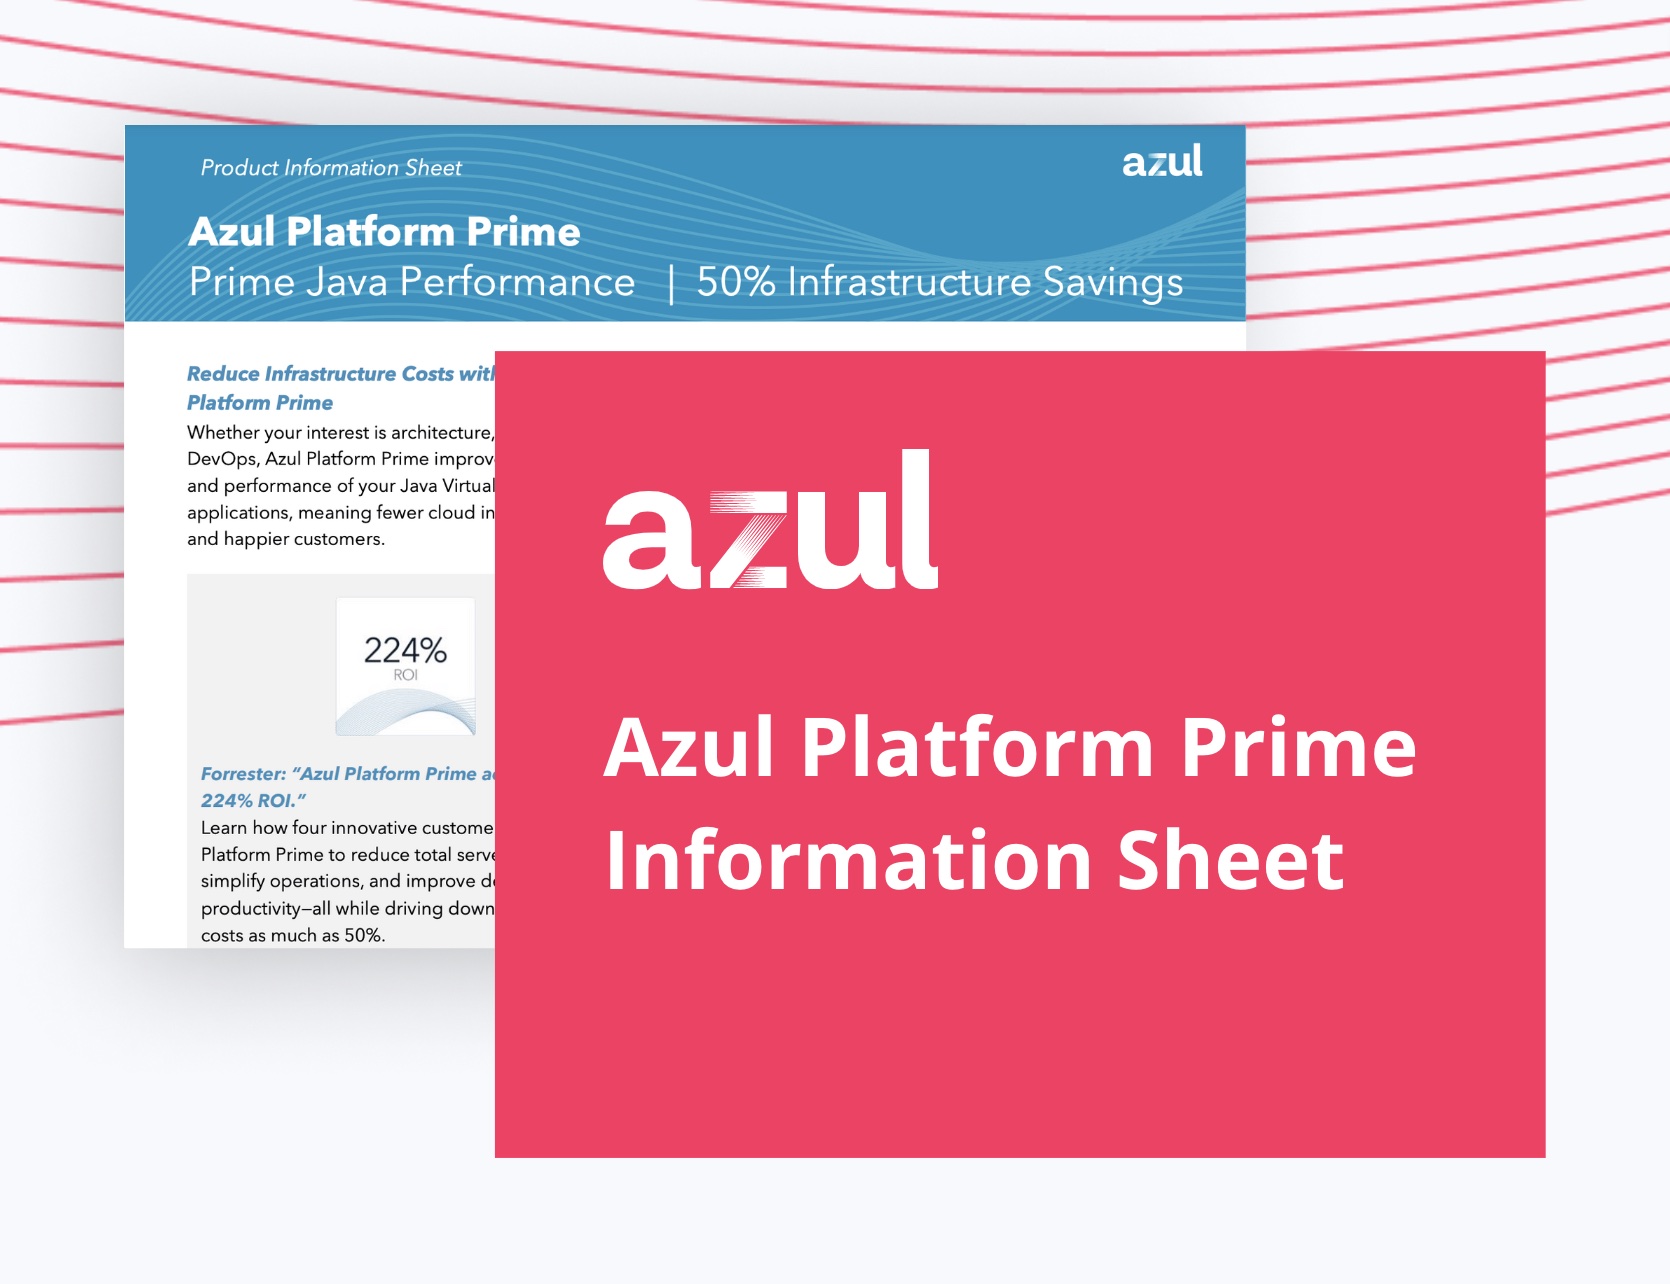 Azul Platform Prime Information Sheet